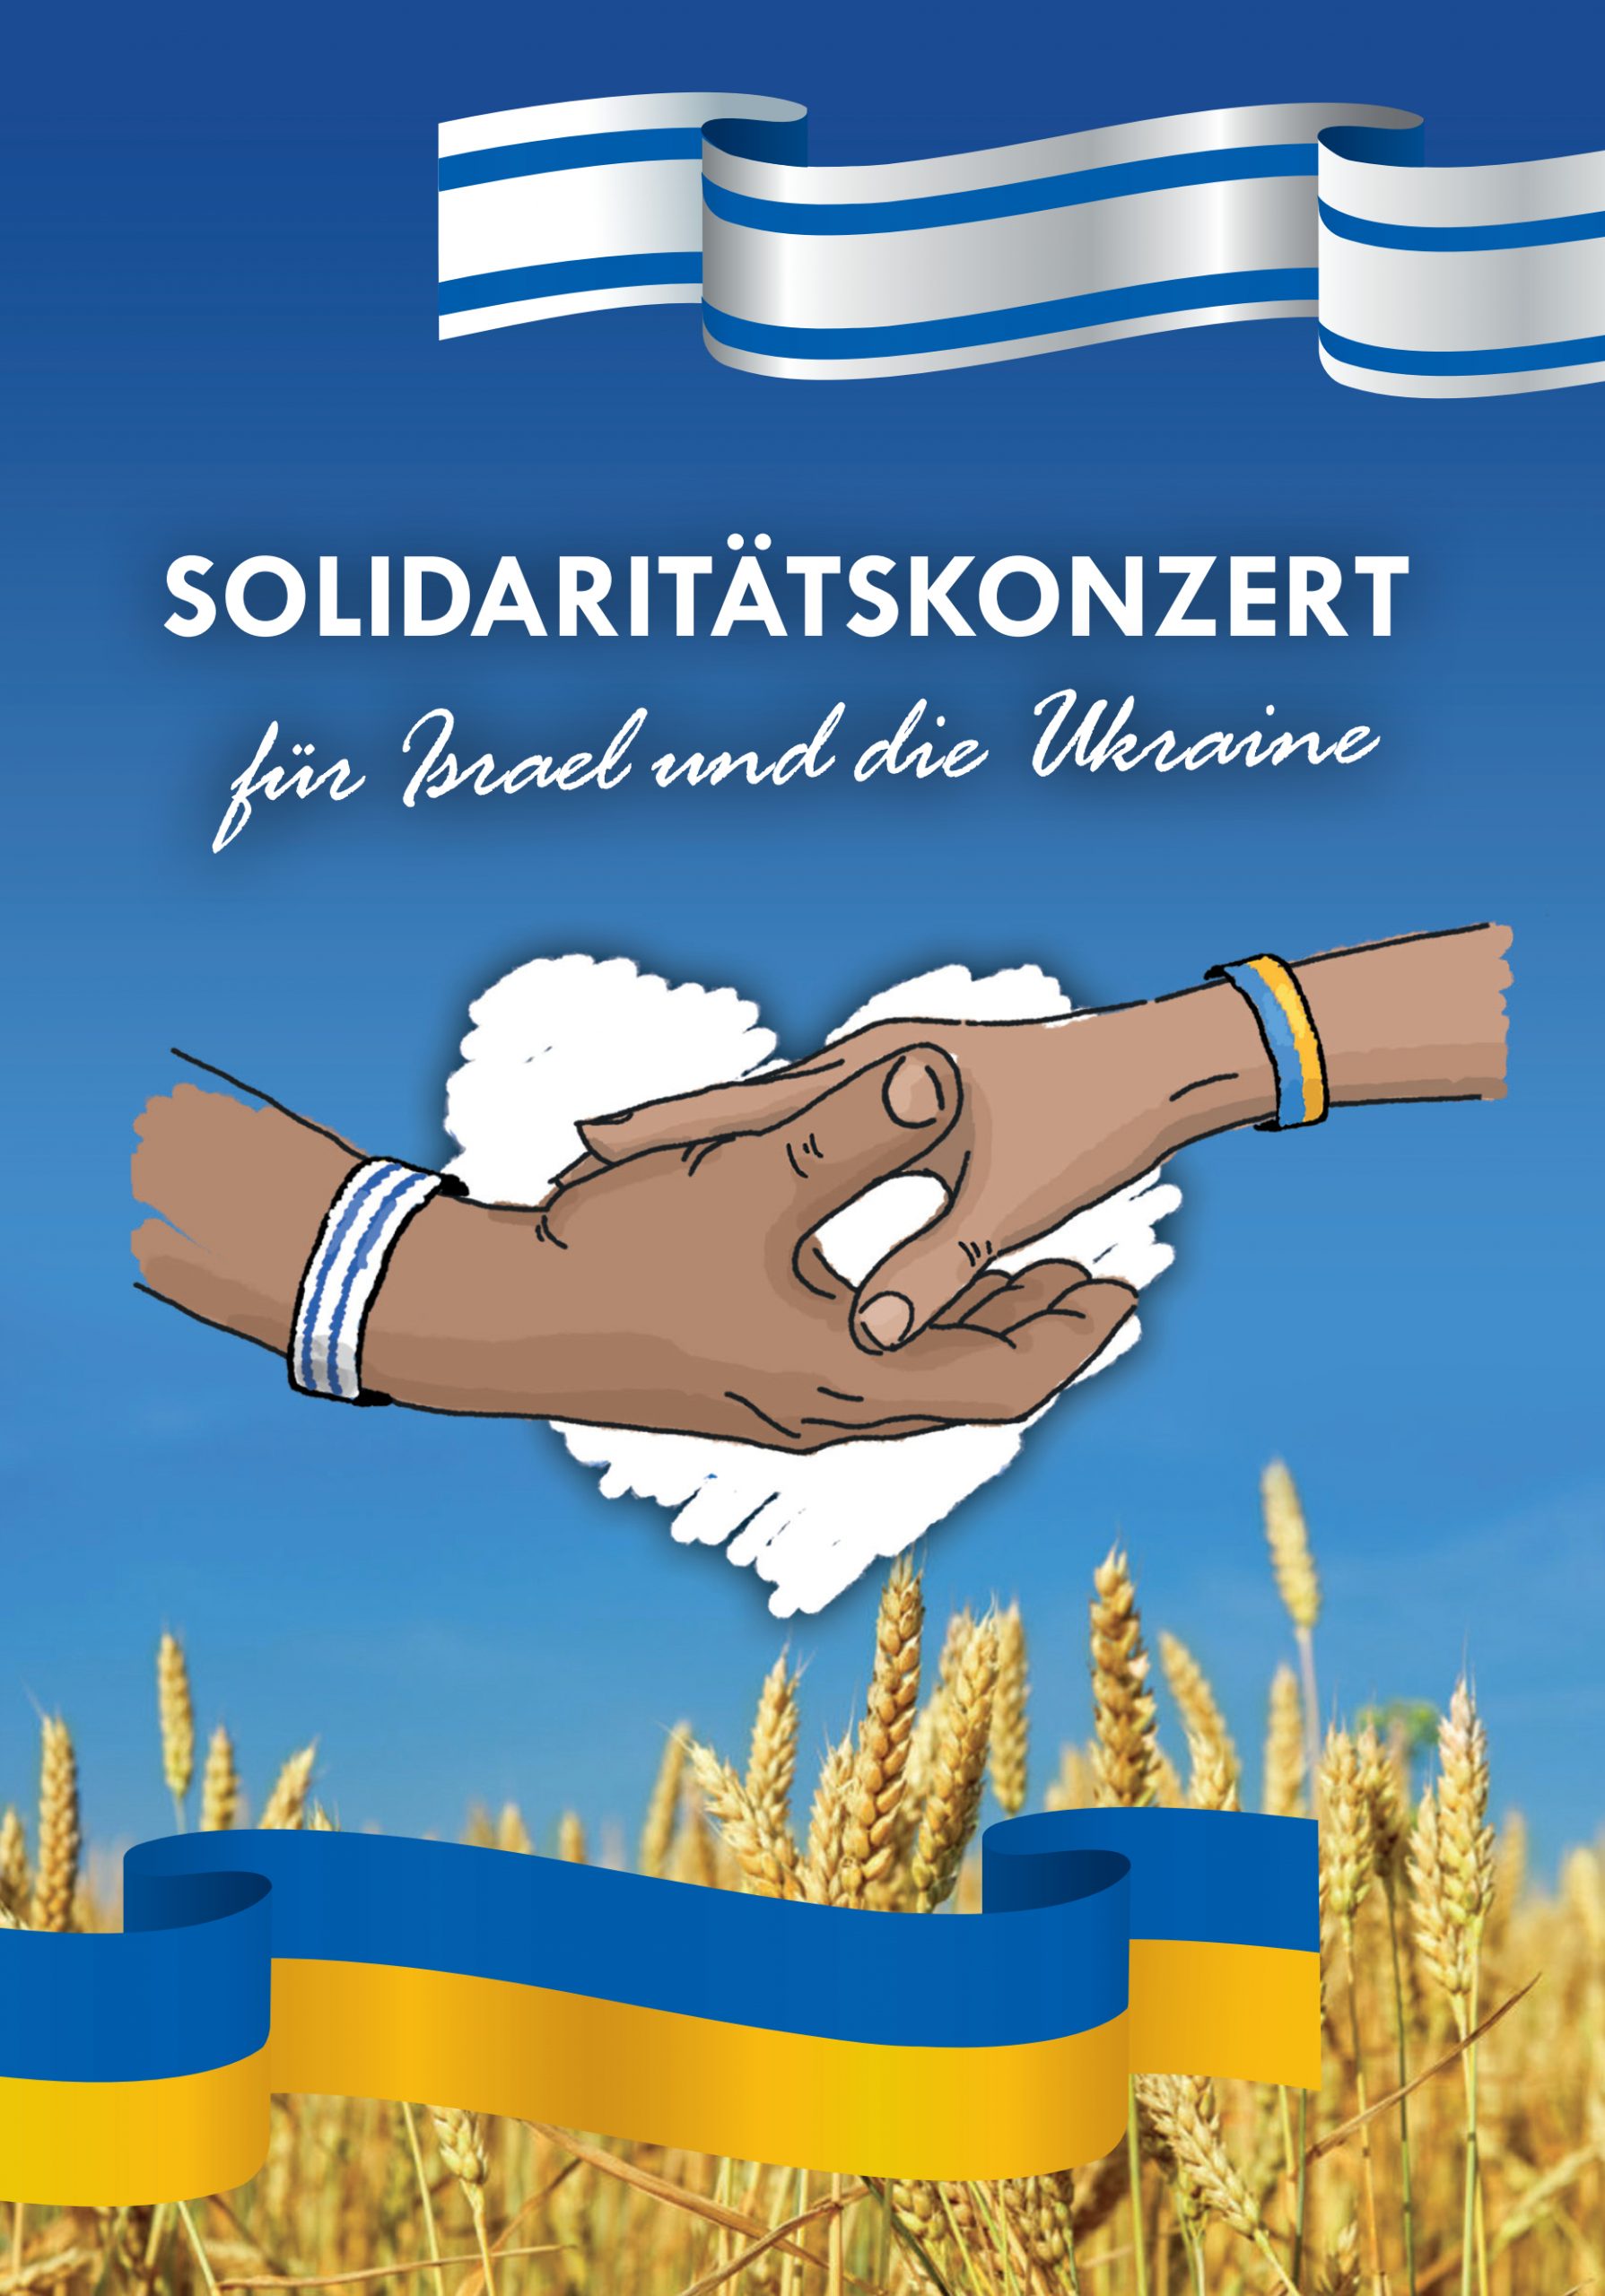 Solidaritätskonzert Israel Ukraine